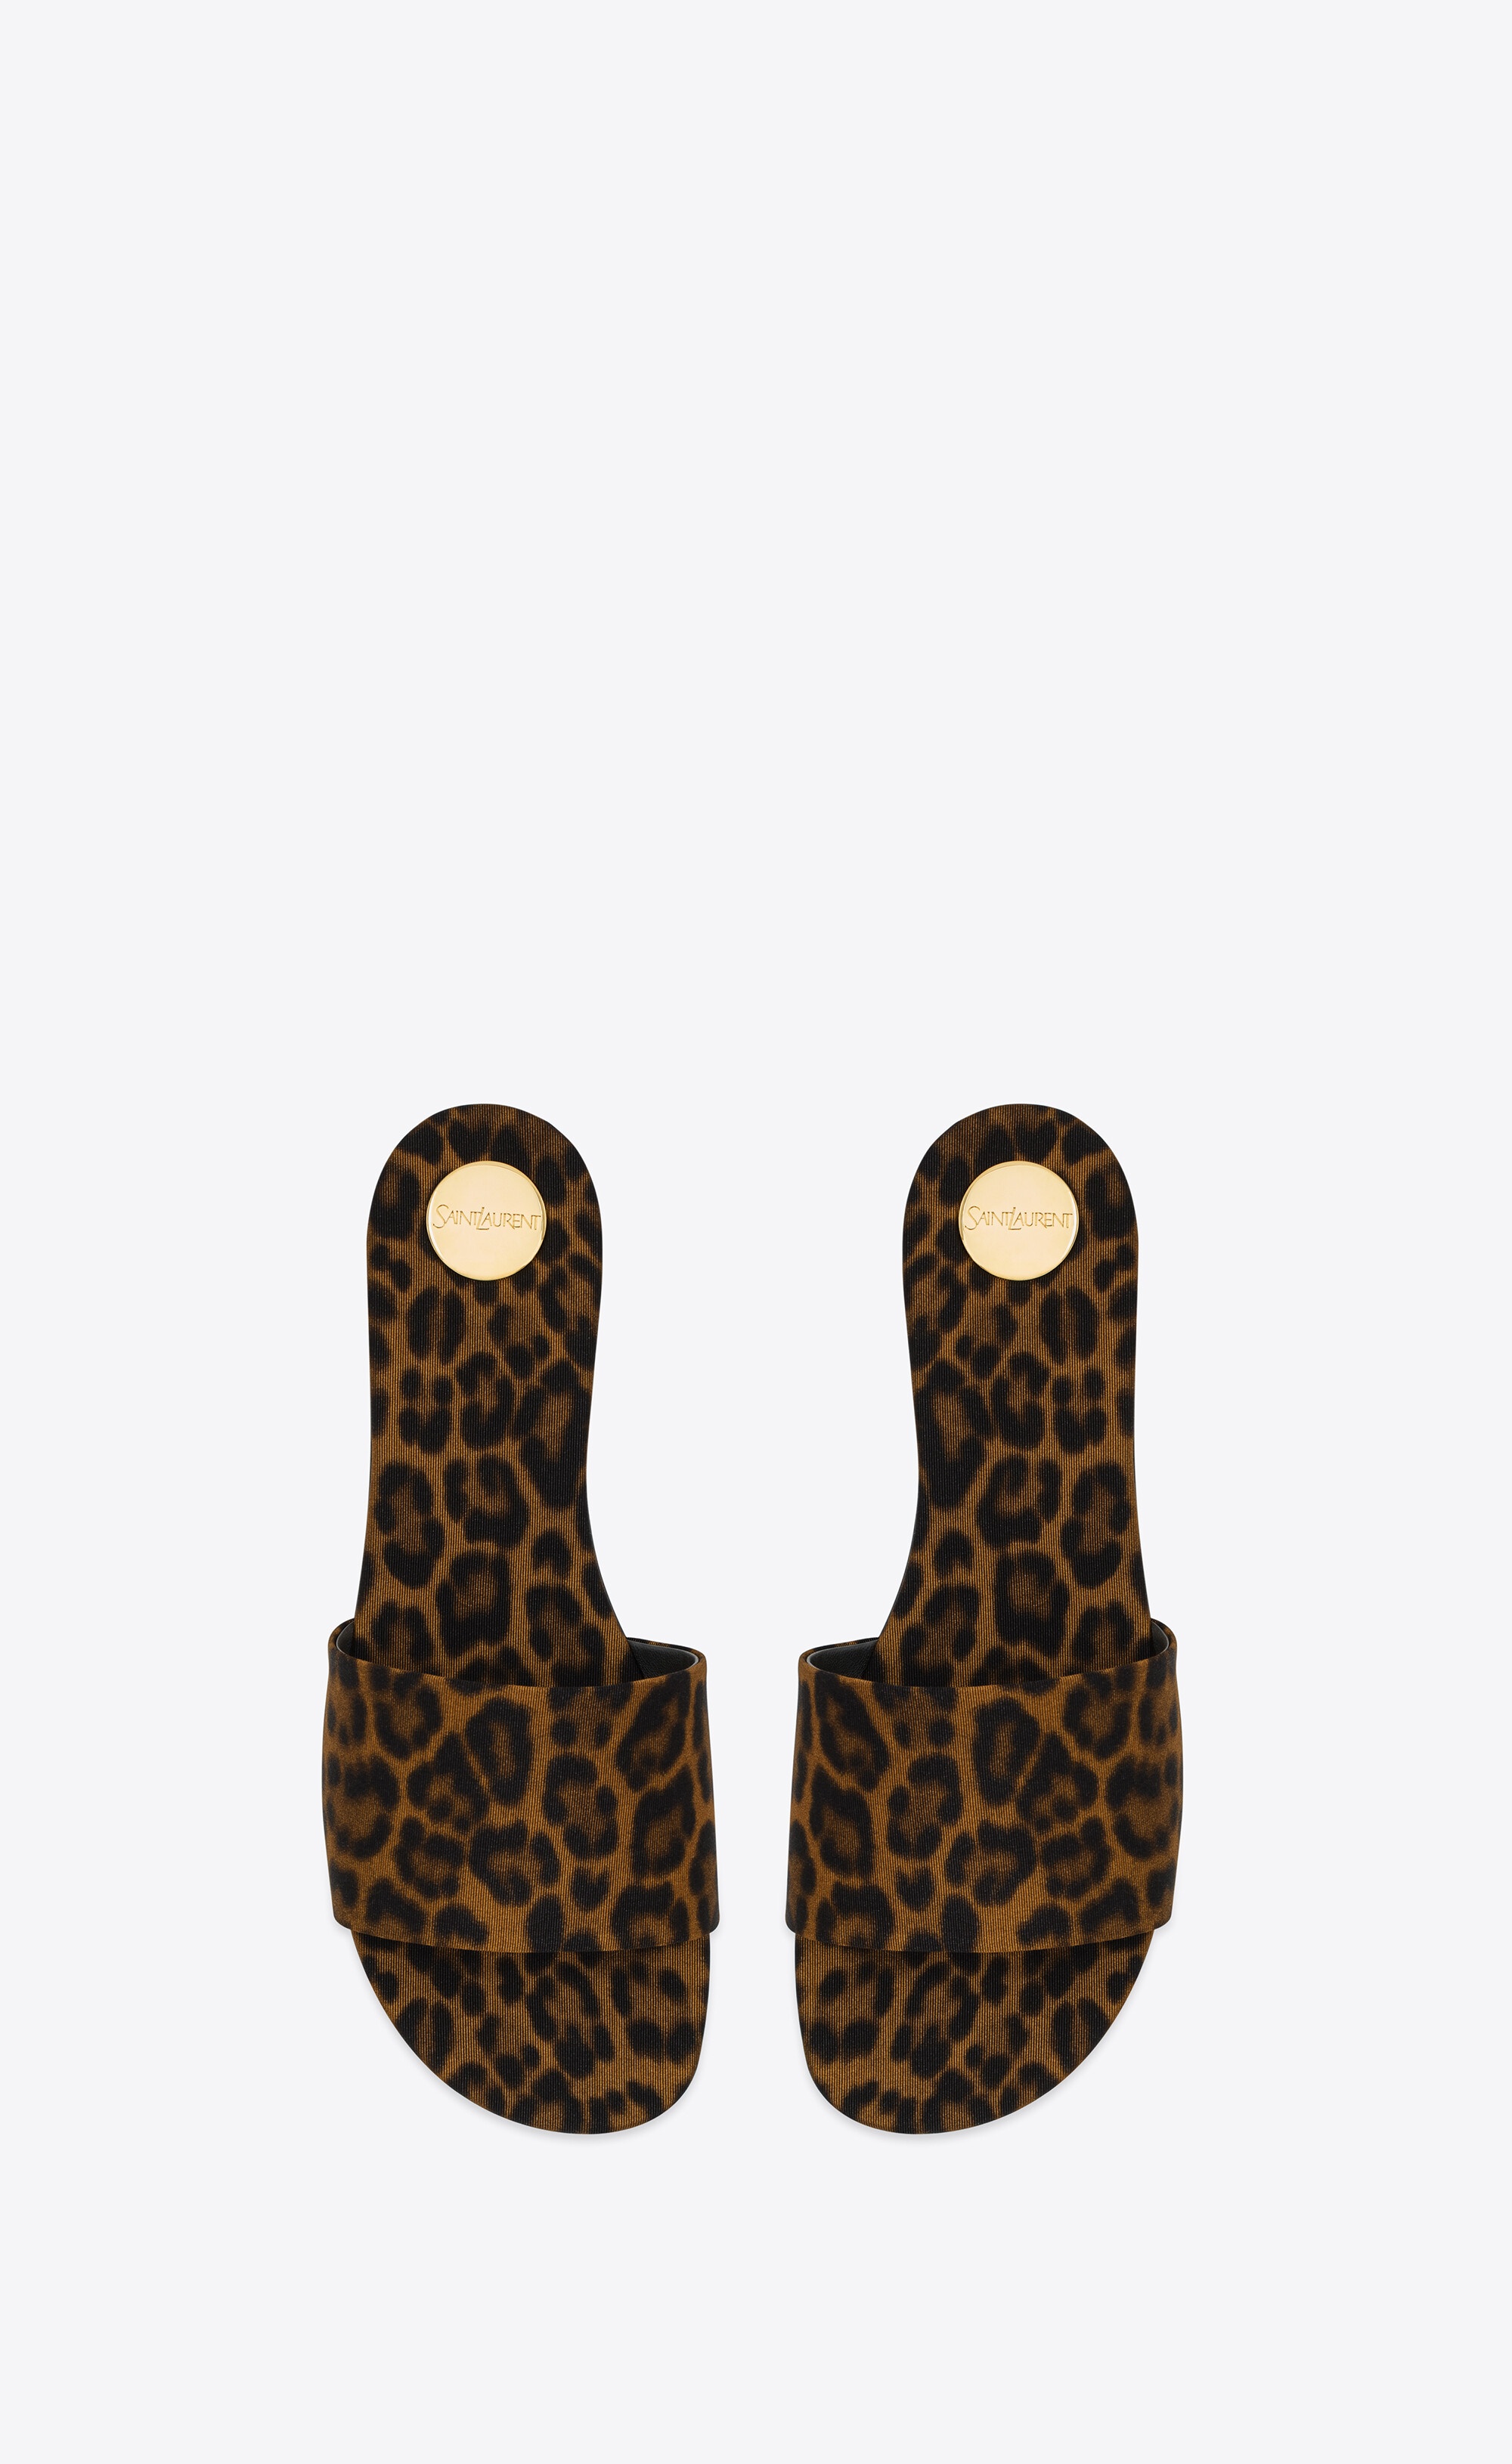 carlyle slides in leopard grosgrain - 2